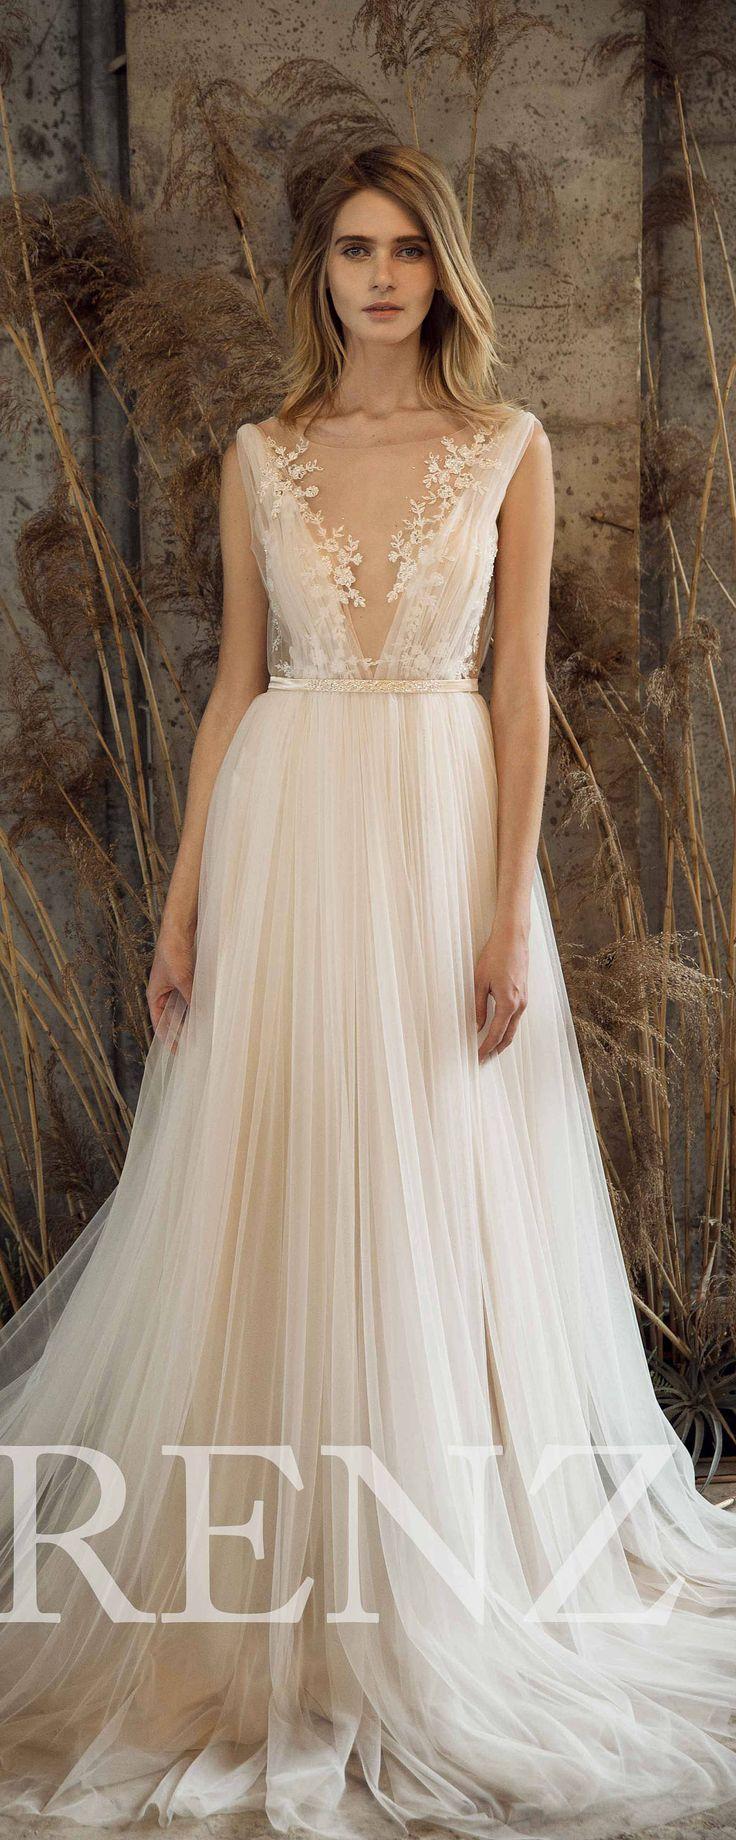 زفاف - Wedding Dress Off White Tulle Dress,V Neck Bridal Dress,Lace Illusion Backless Bride Dress Train Maxi Dress,Sleeveless Evening Dress(LW192)